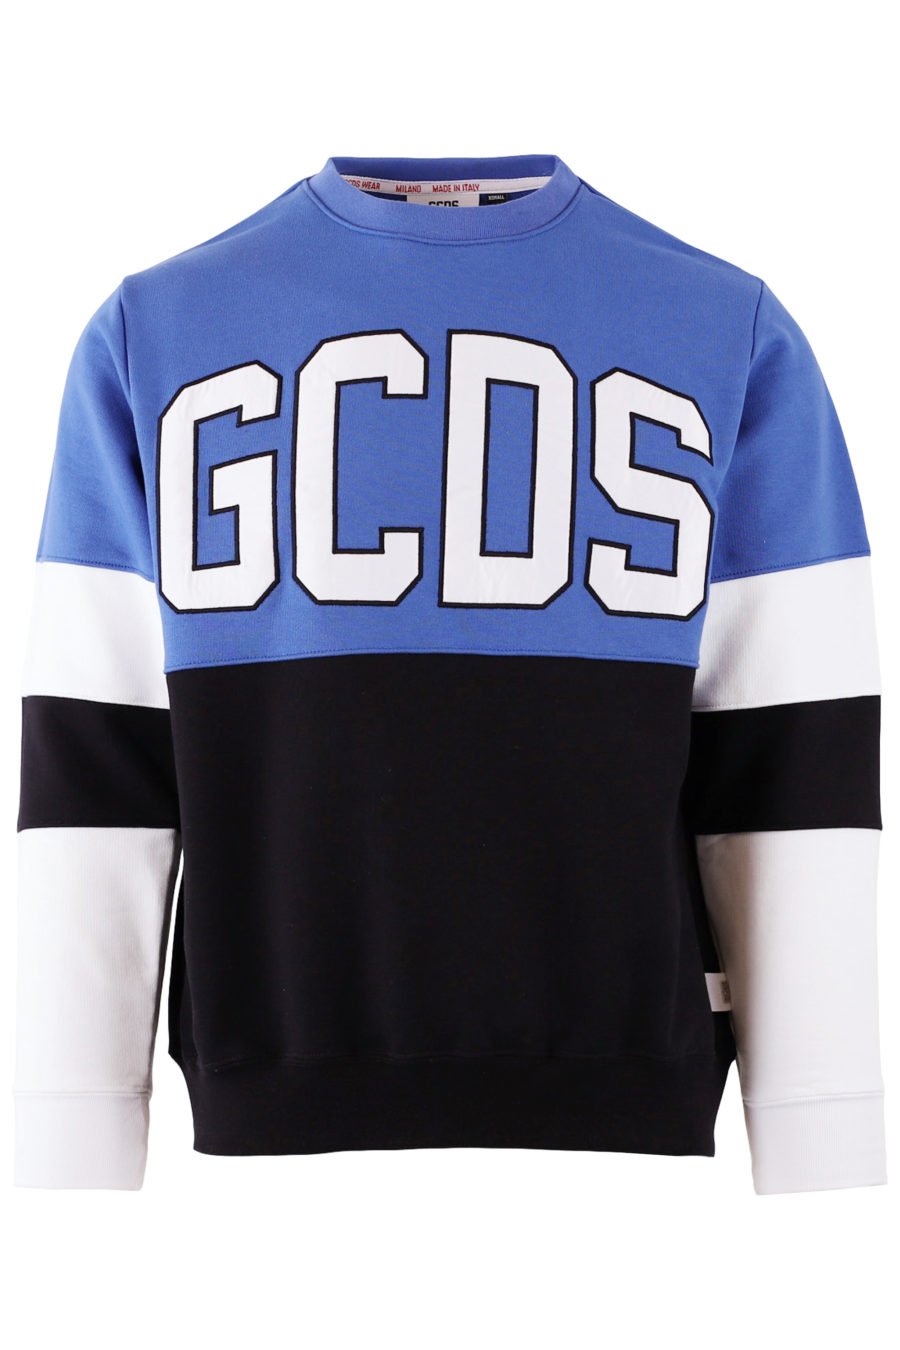 Blue colour block sweatshirt with logo - IMG 7685 copy